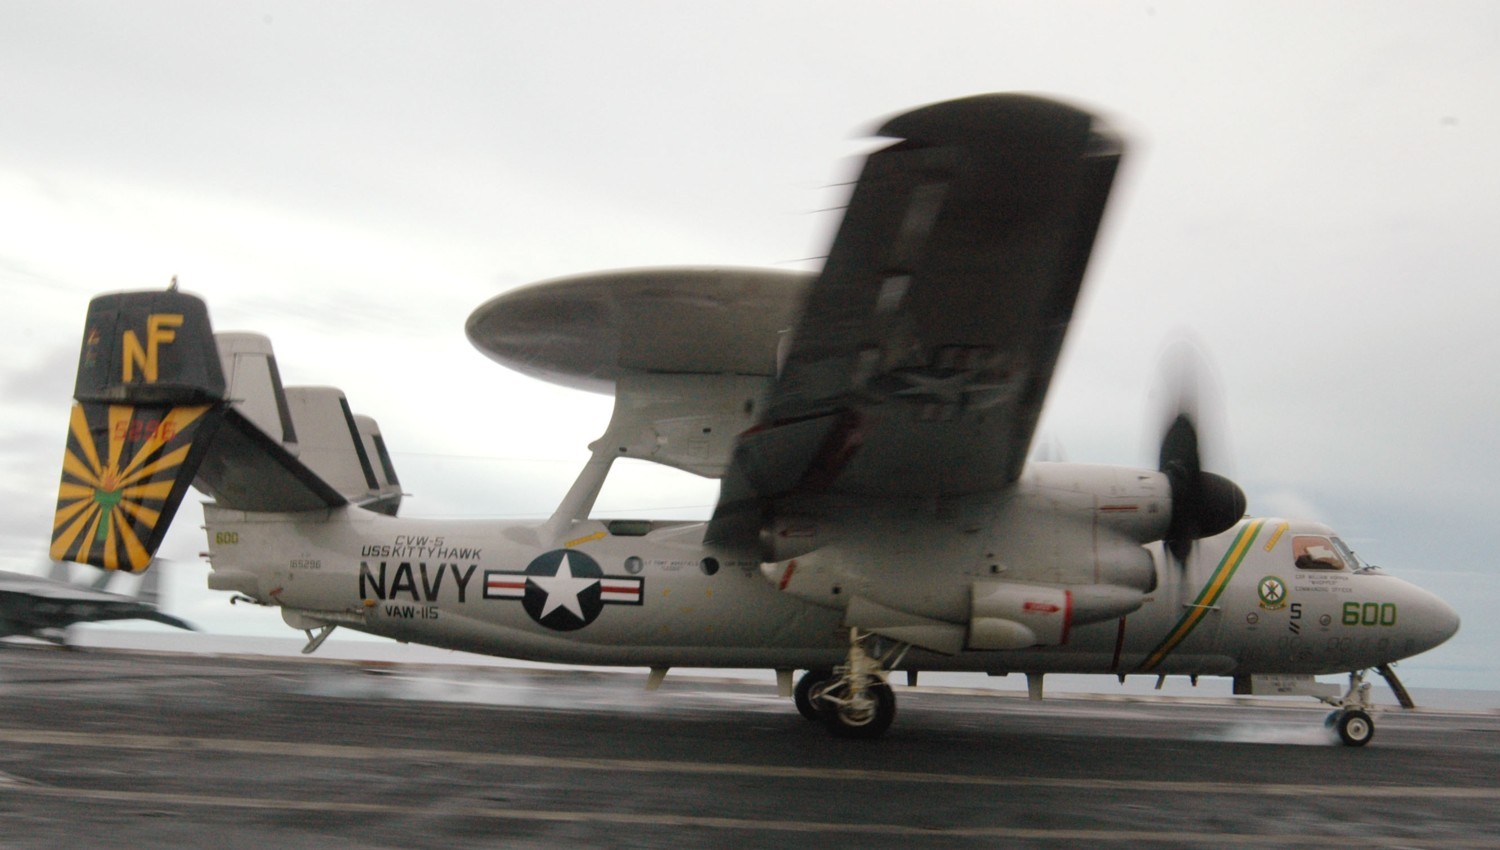 vaw-115 liberty bells carrier airborne early warning squadron us navy grumman e-2c hawkeye 2000 np cvw-5 uss kitty hawk cv-63 184